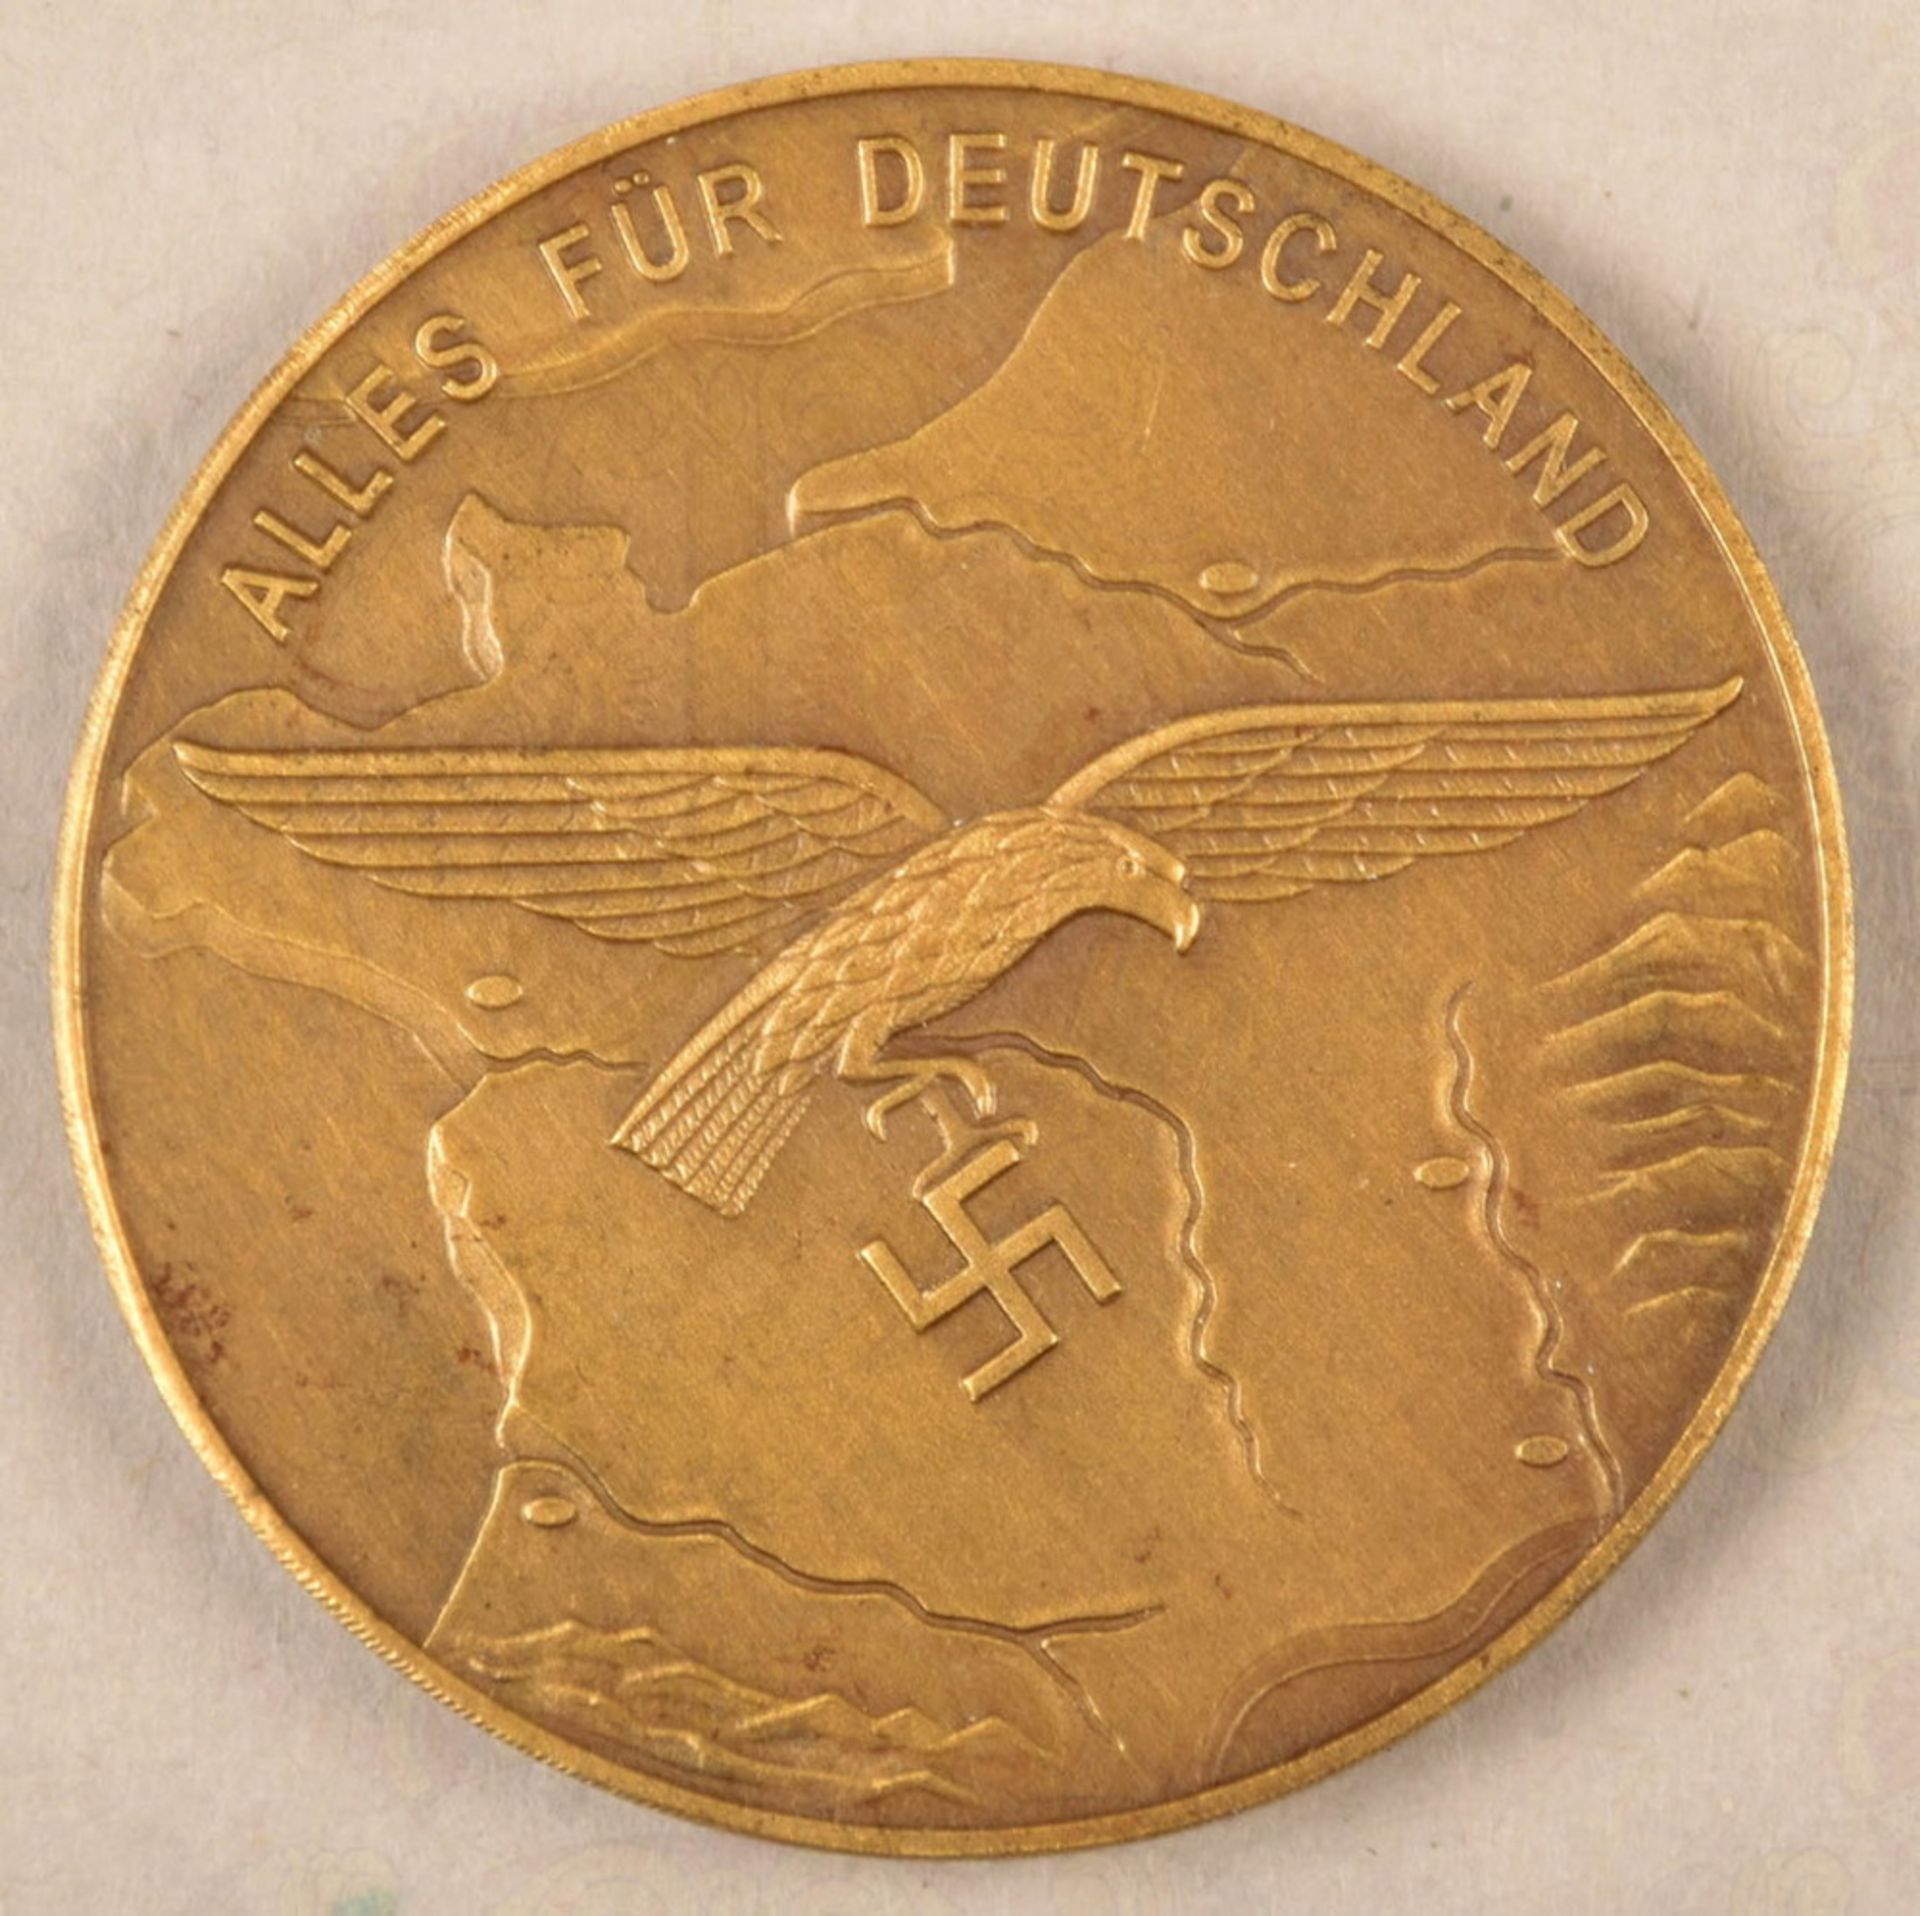 Luftwaffe medal for faithful service 1944 - Image 2 of 3